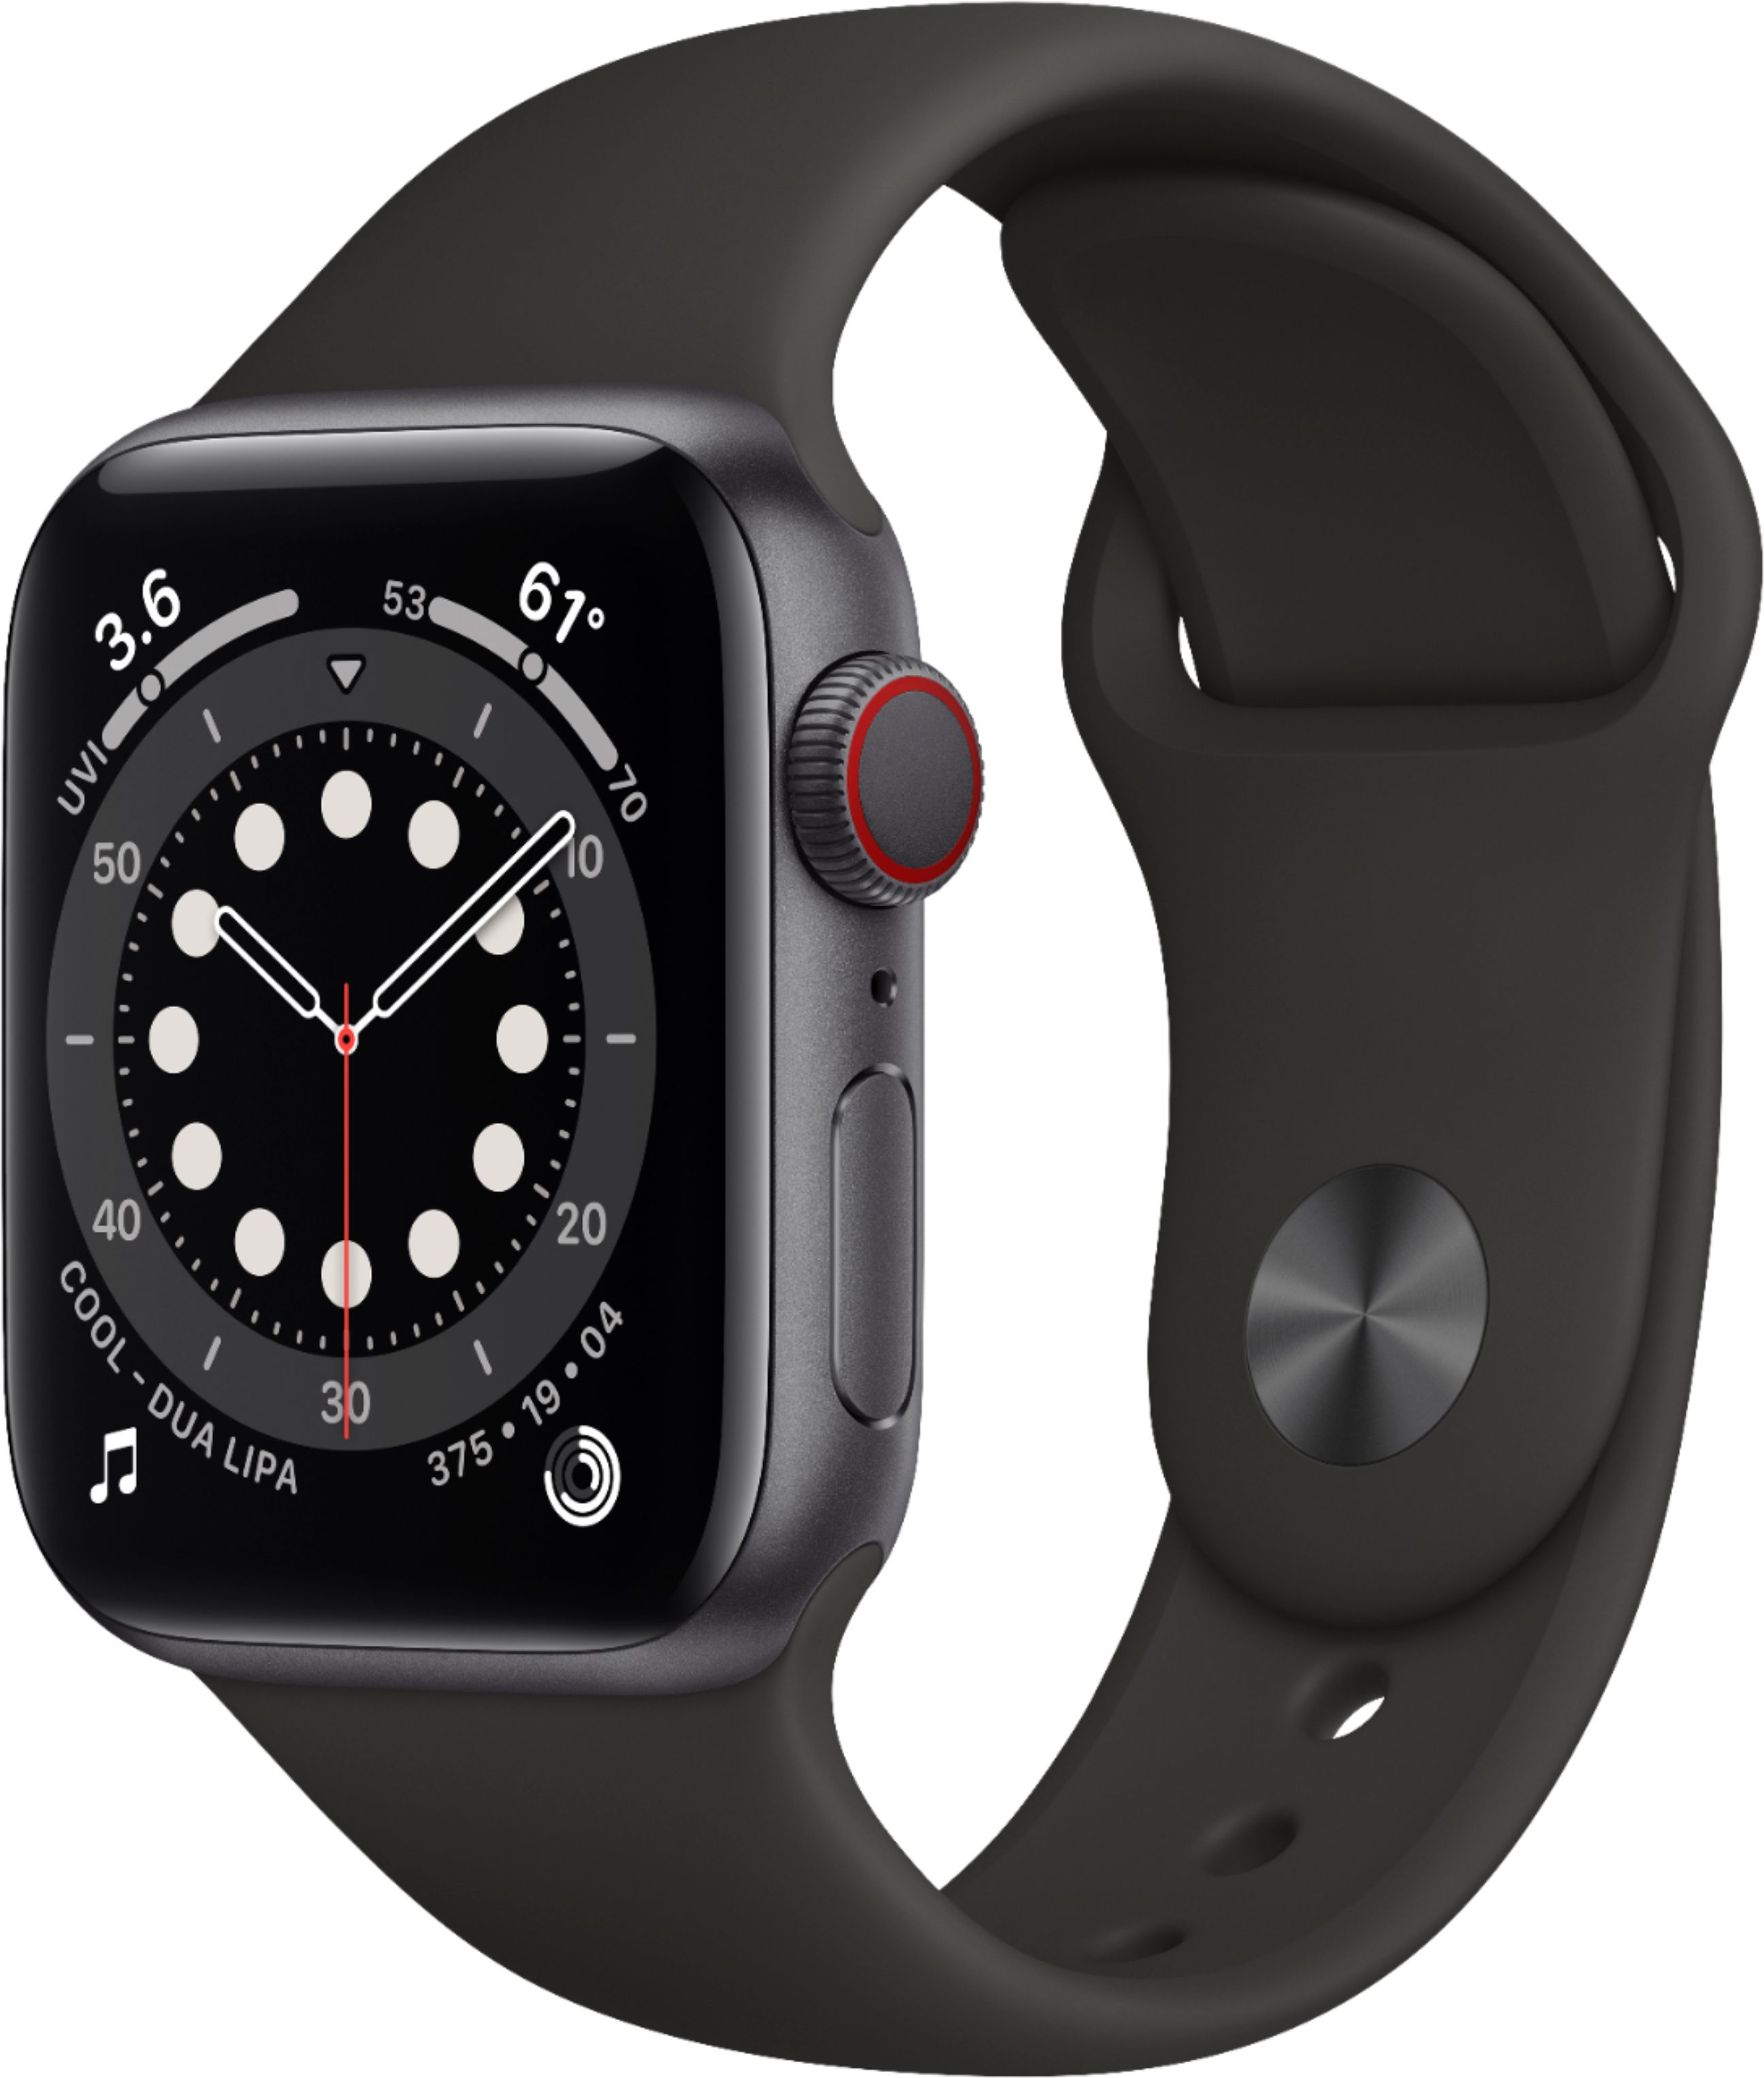 Apple Watch Series 4 GPS model 40mmバッテリー状態…80% - iPhone 